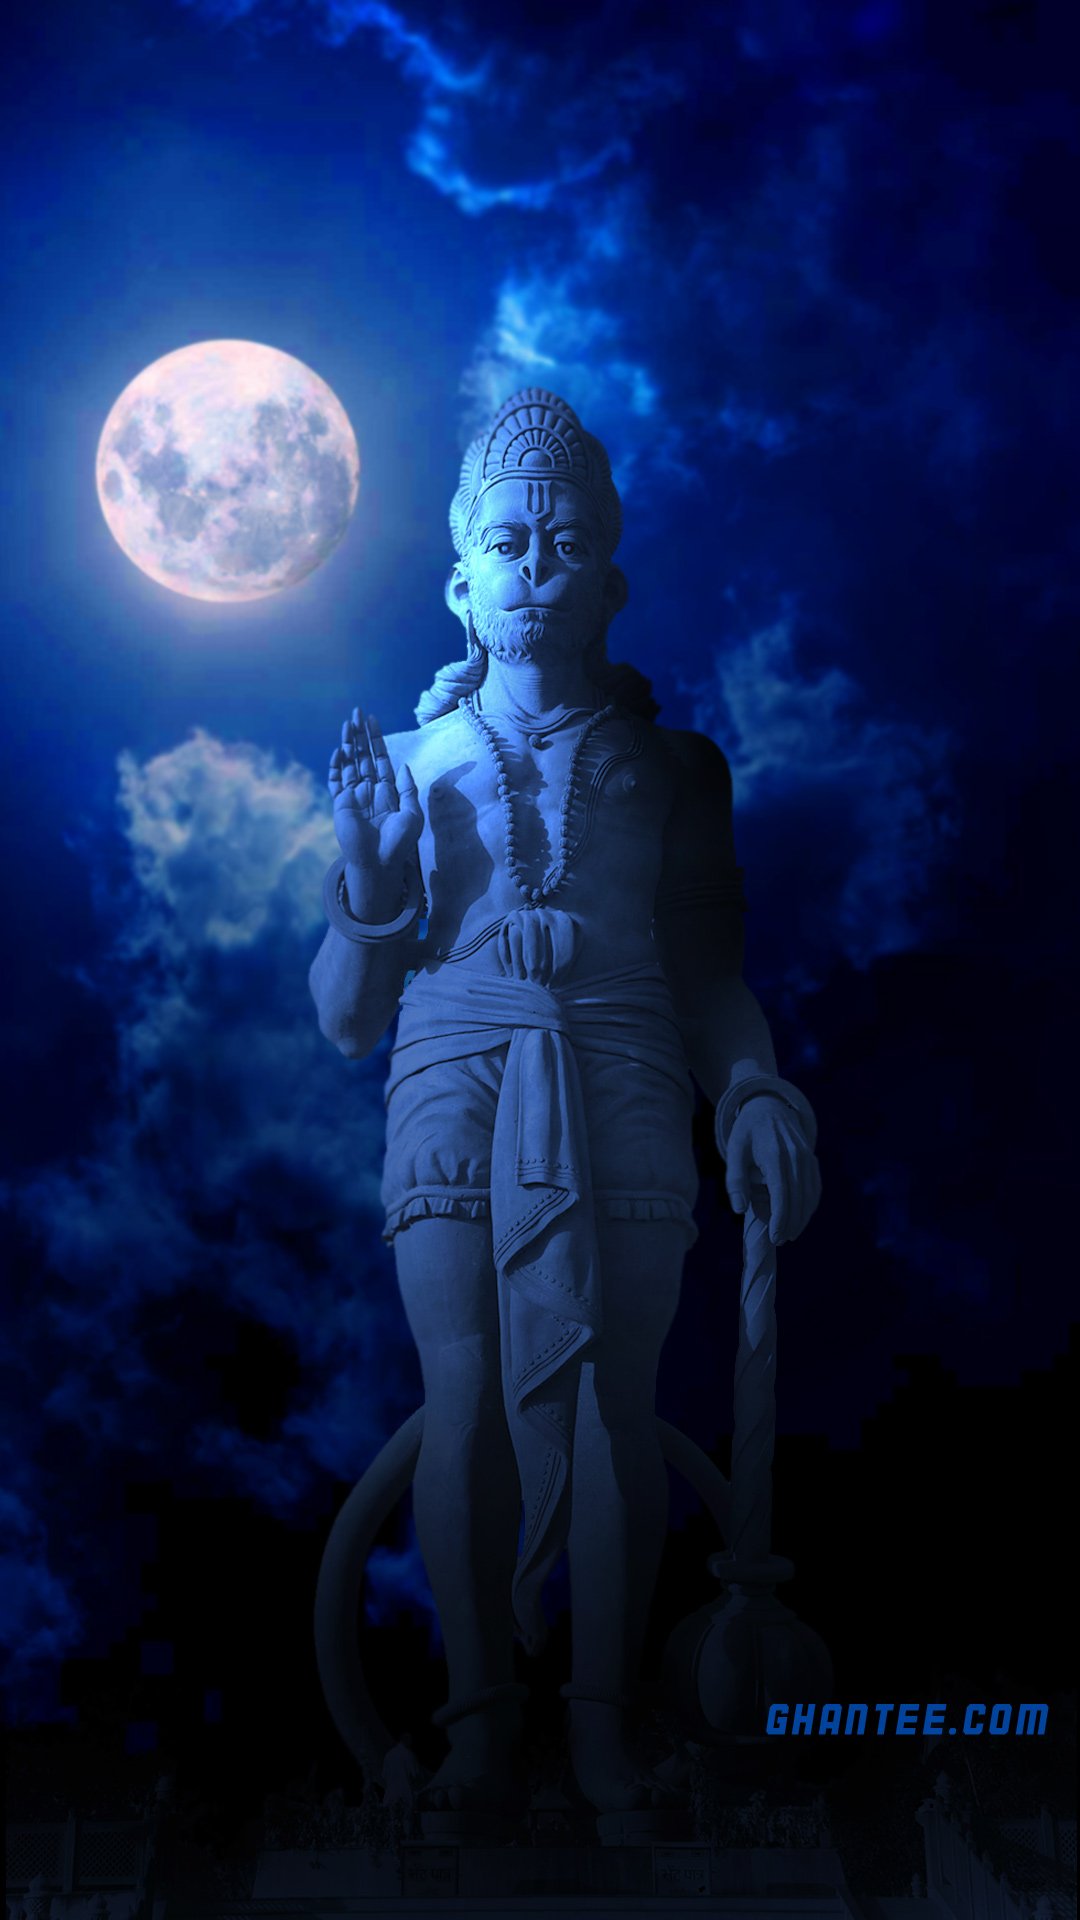 Lord hanuman statue